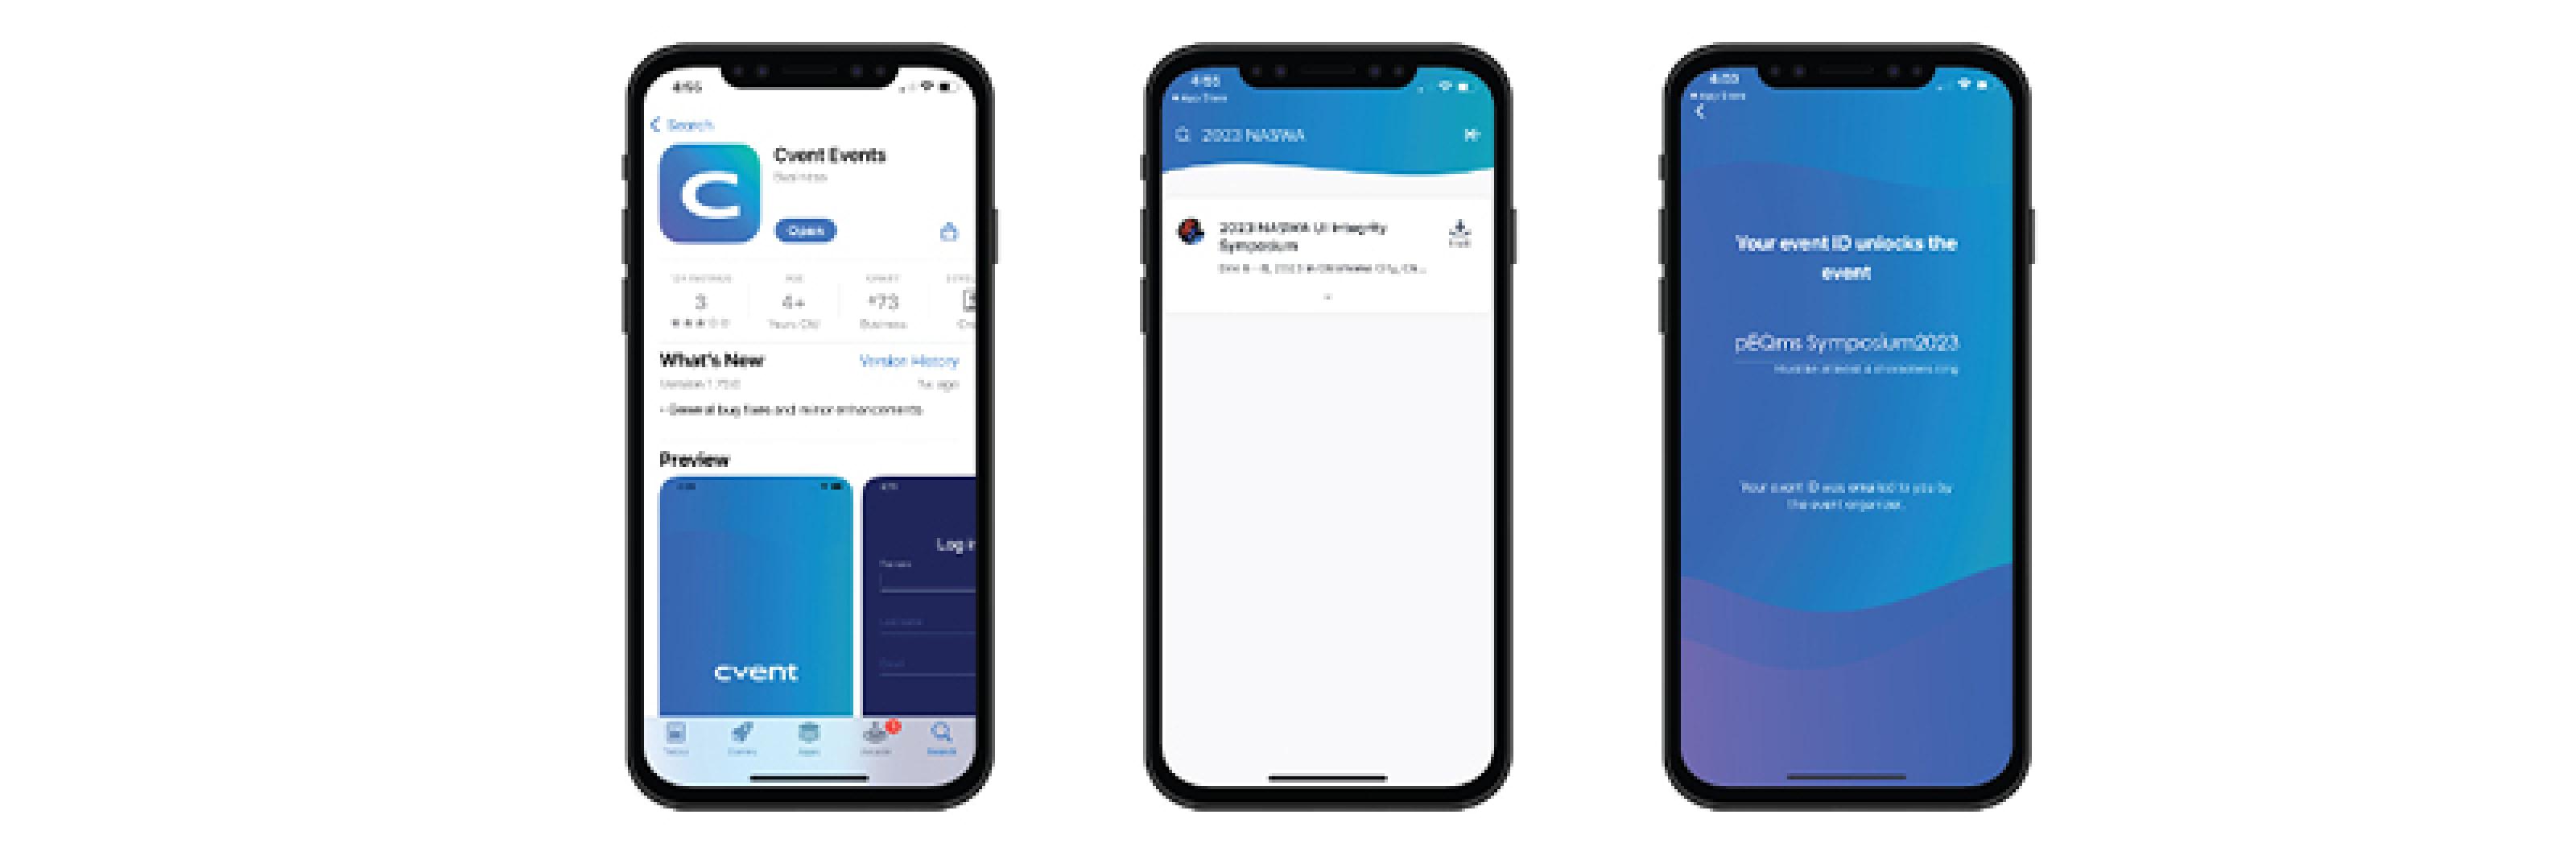 App Instruction Screenshots and Phone Mock-ups